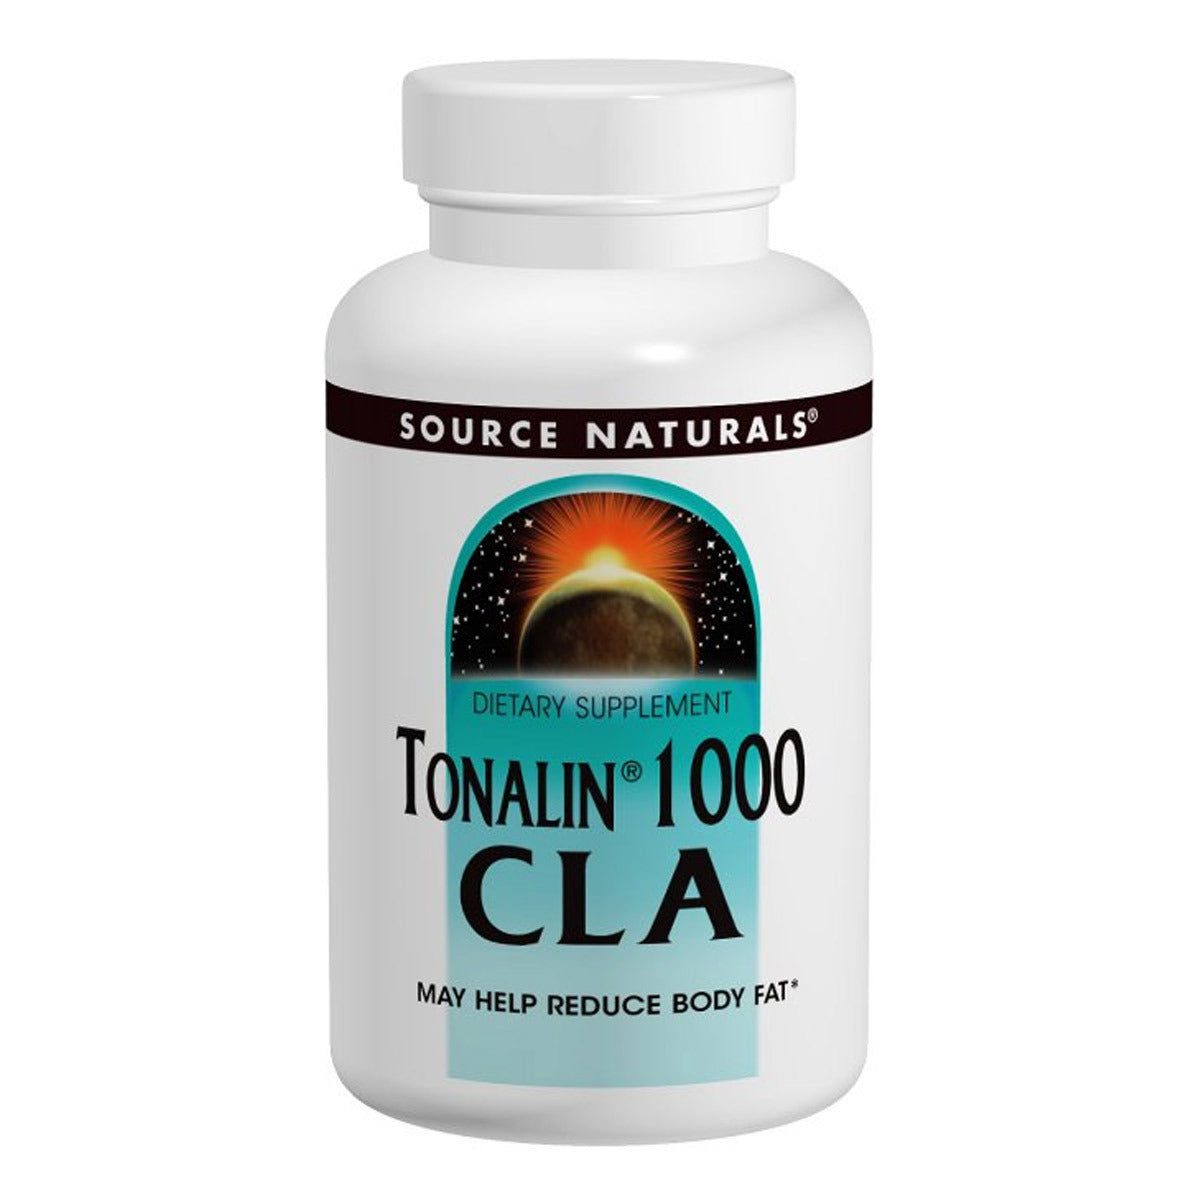 Primary image of Tonalin 1000 CLA